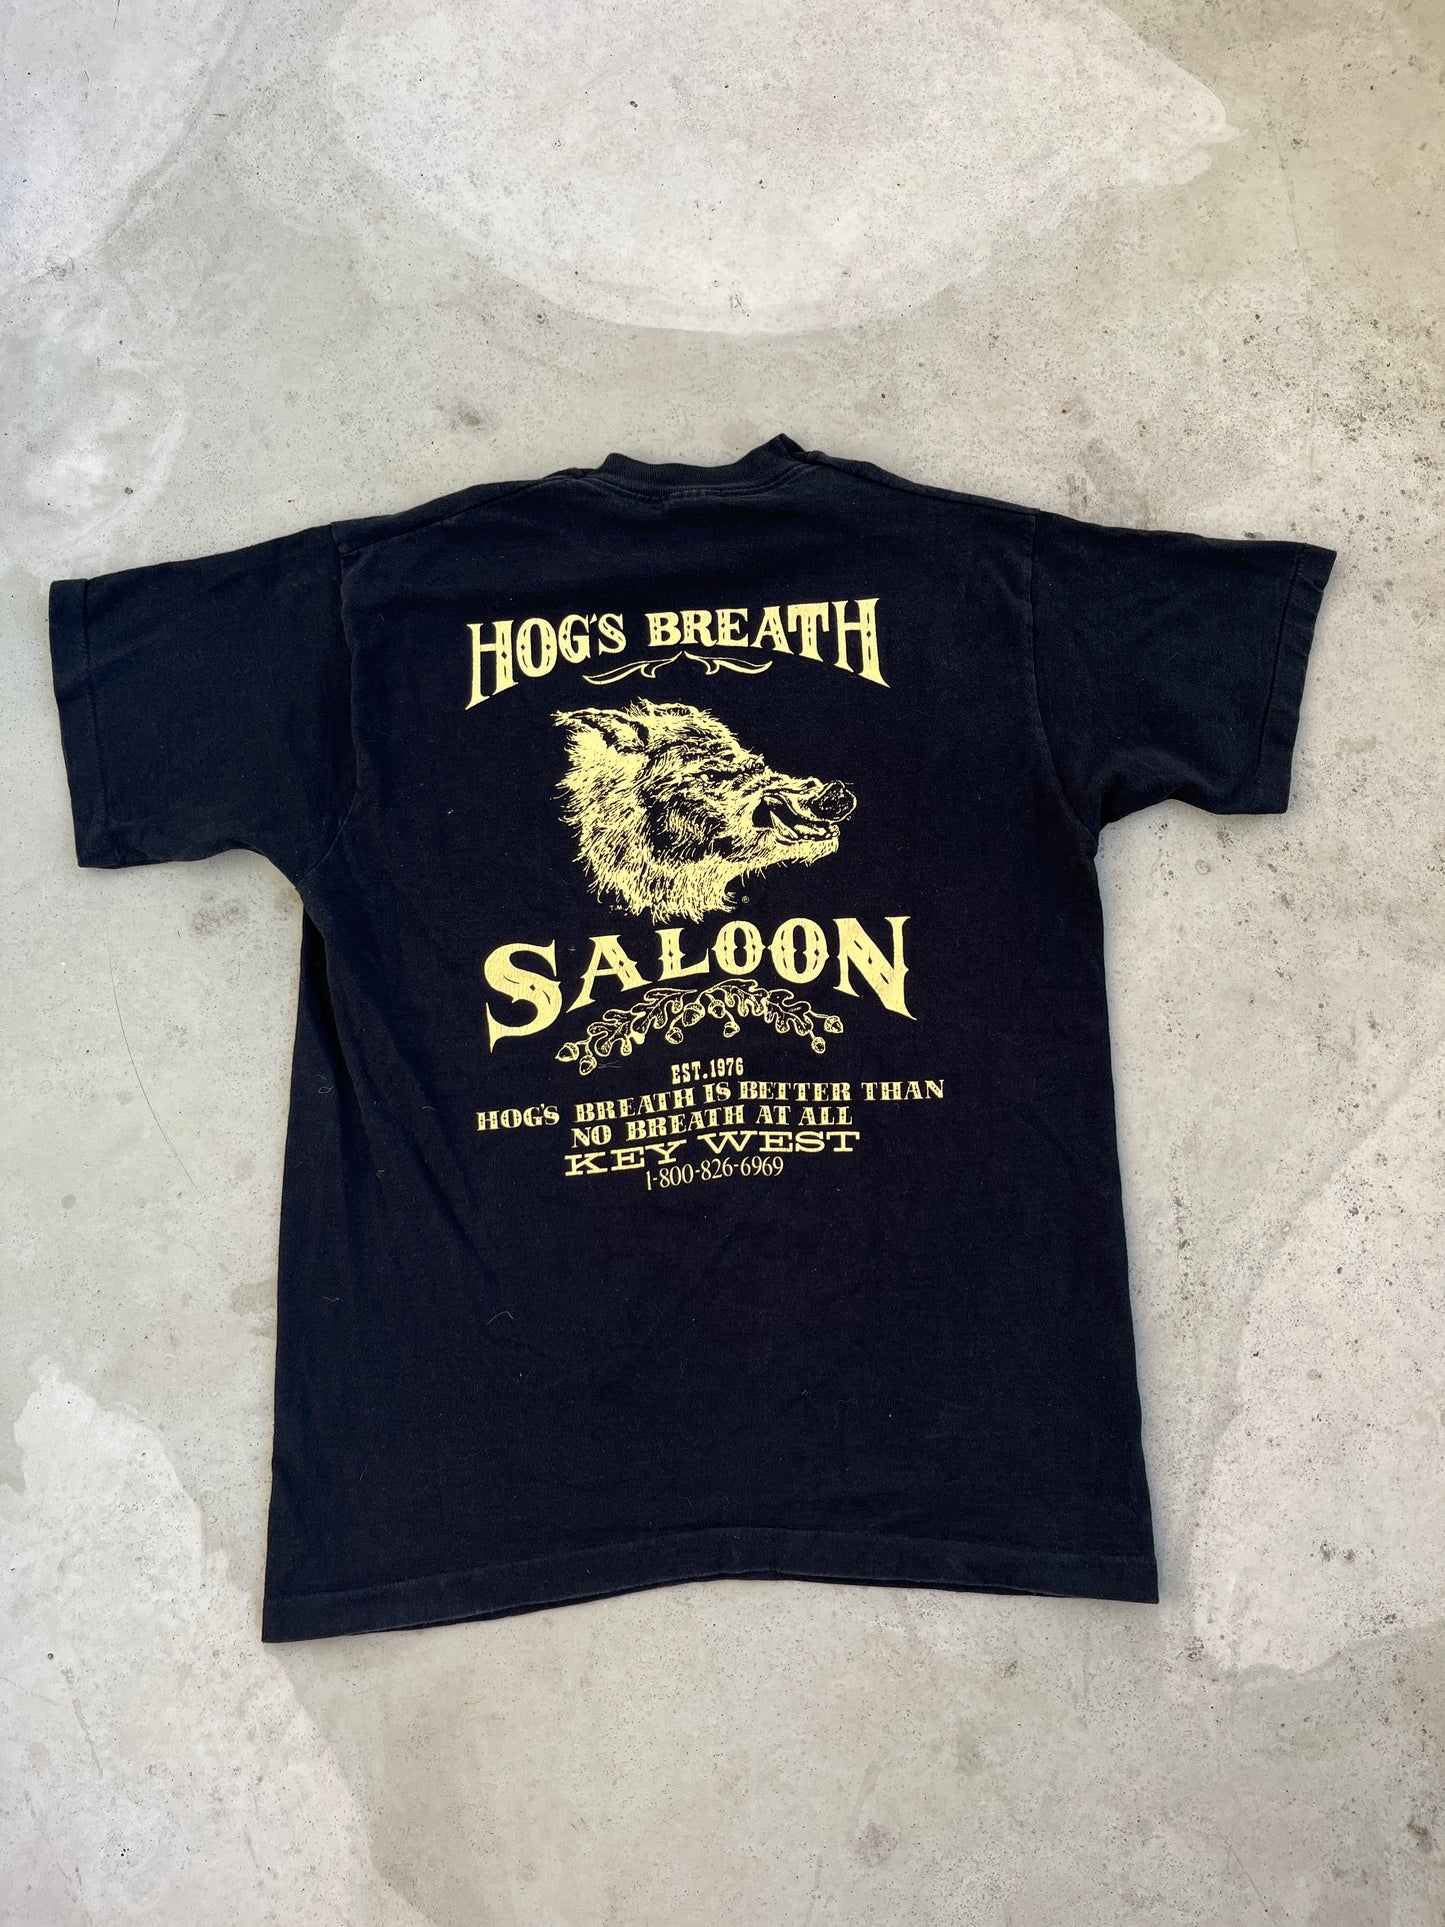 Hogs Breath Saloon Tee - 1990’s